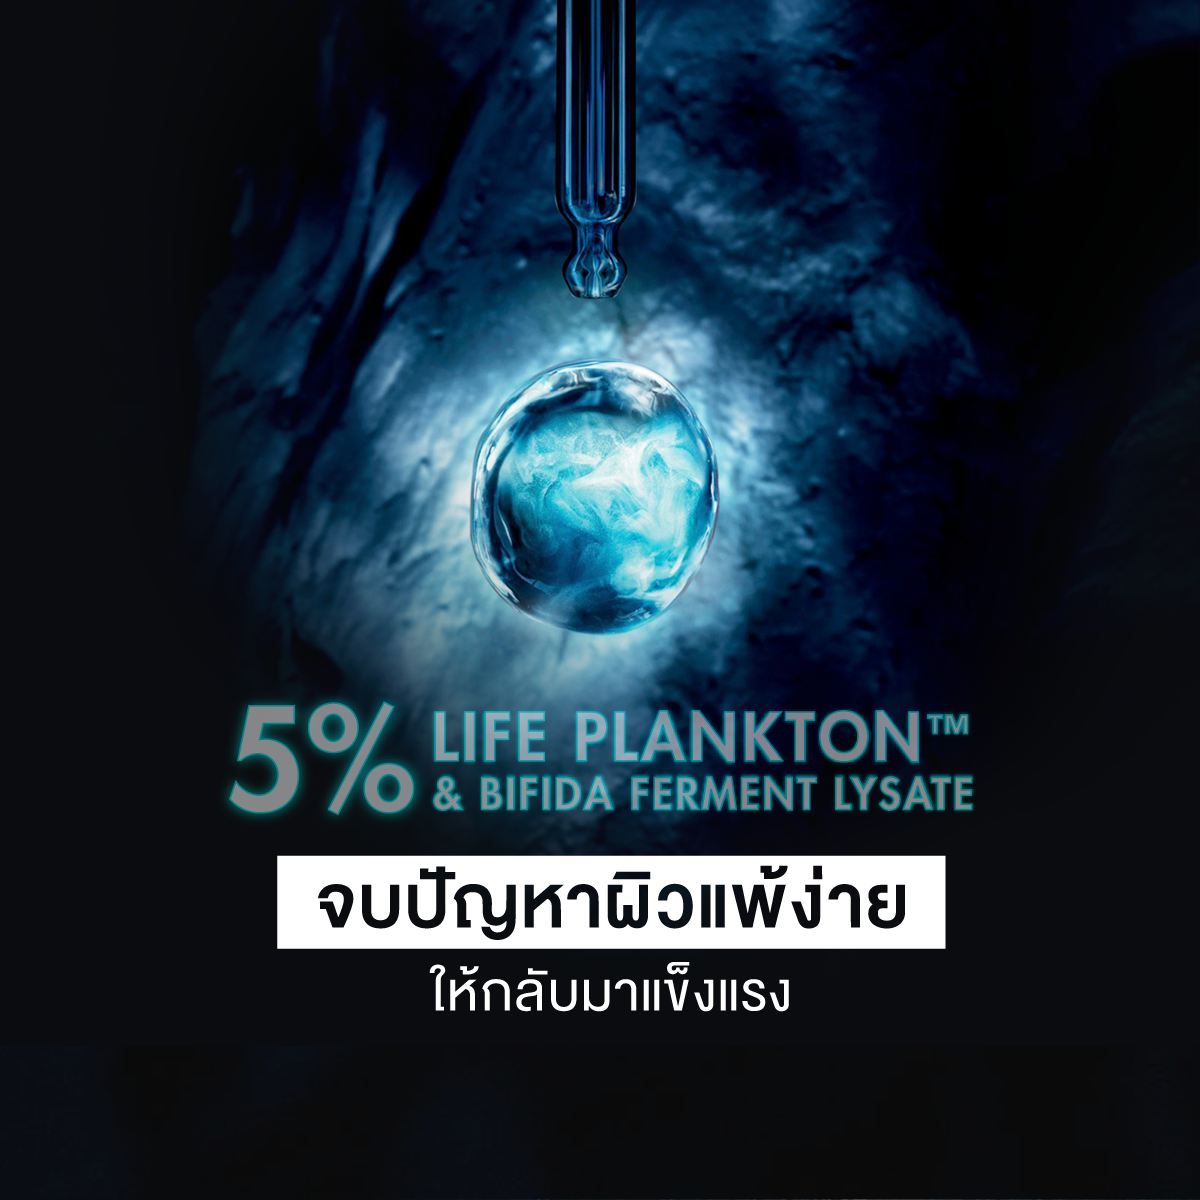 Biotherm Life Plankton Elixir 30 ml  เซรั่มดูแลความร่วงโรยของผิว กรรมสิทธิ์ของไบโอเธิร์มอย่าง LIFE PLANKTON™ ในความเข้มข้น 5 %^ สูงสุดที่ใช้ในผลิตภัณฑ์บำรุงผิวของแบรนด์  ผนึกกำลังกับส่วนผสมทรงประสิทธิภาพจากธรรมชาติอย่างไฮยาลูรอนิกแอซิด (Hyaluronic Acid) และวิตามินซี ผ่านการทดสอบแล้วว่าช่วยให้ผิวดูแข็งแรงขึ้น ช่วยดูแลการร่วงโรยของผิวทั้งยังช่วยให้ผิวดูอ่อนเยาว์ กระจ่างใส กระชับ และเรียบเนียนขึ้น หลังใช้ต่อเนื่อง 8 วัน